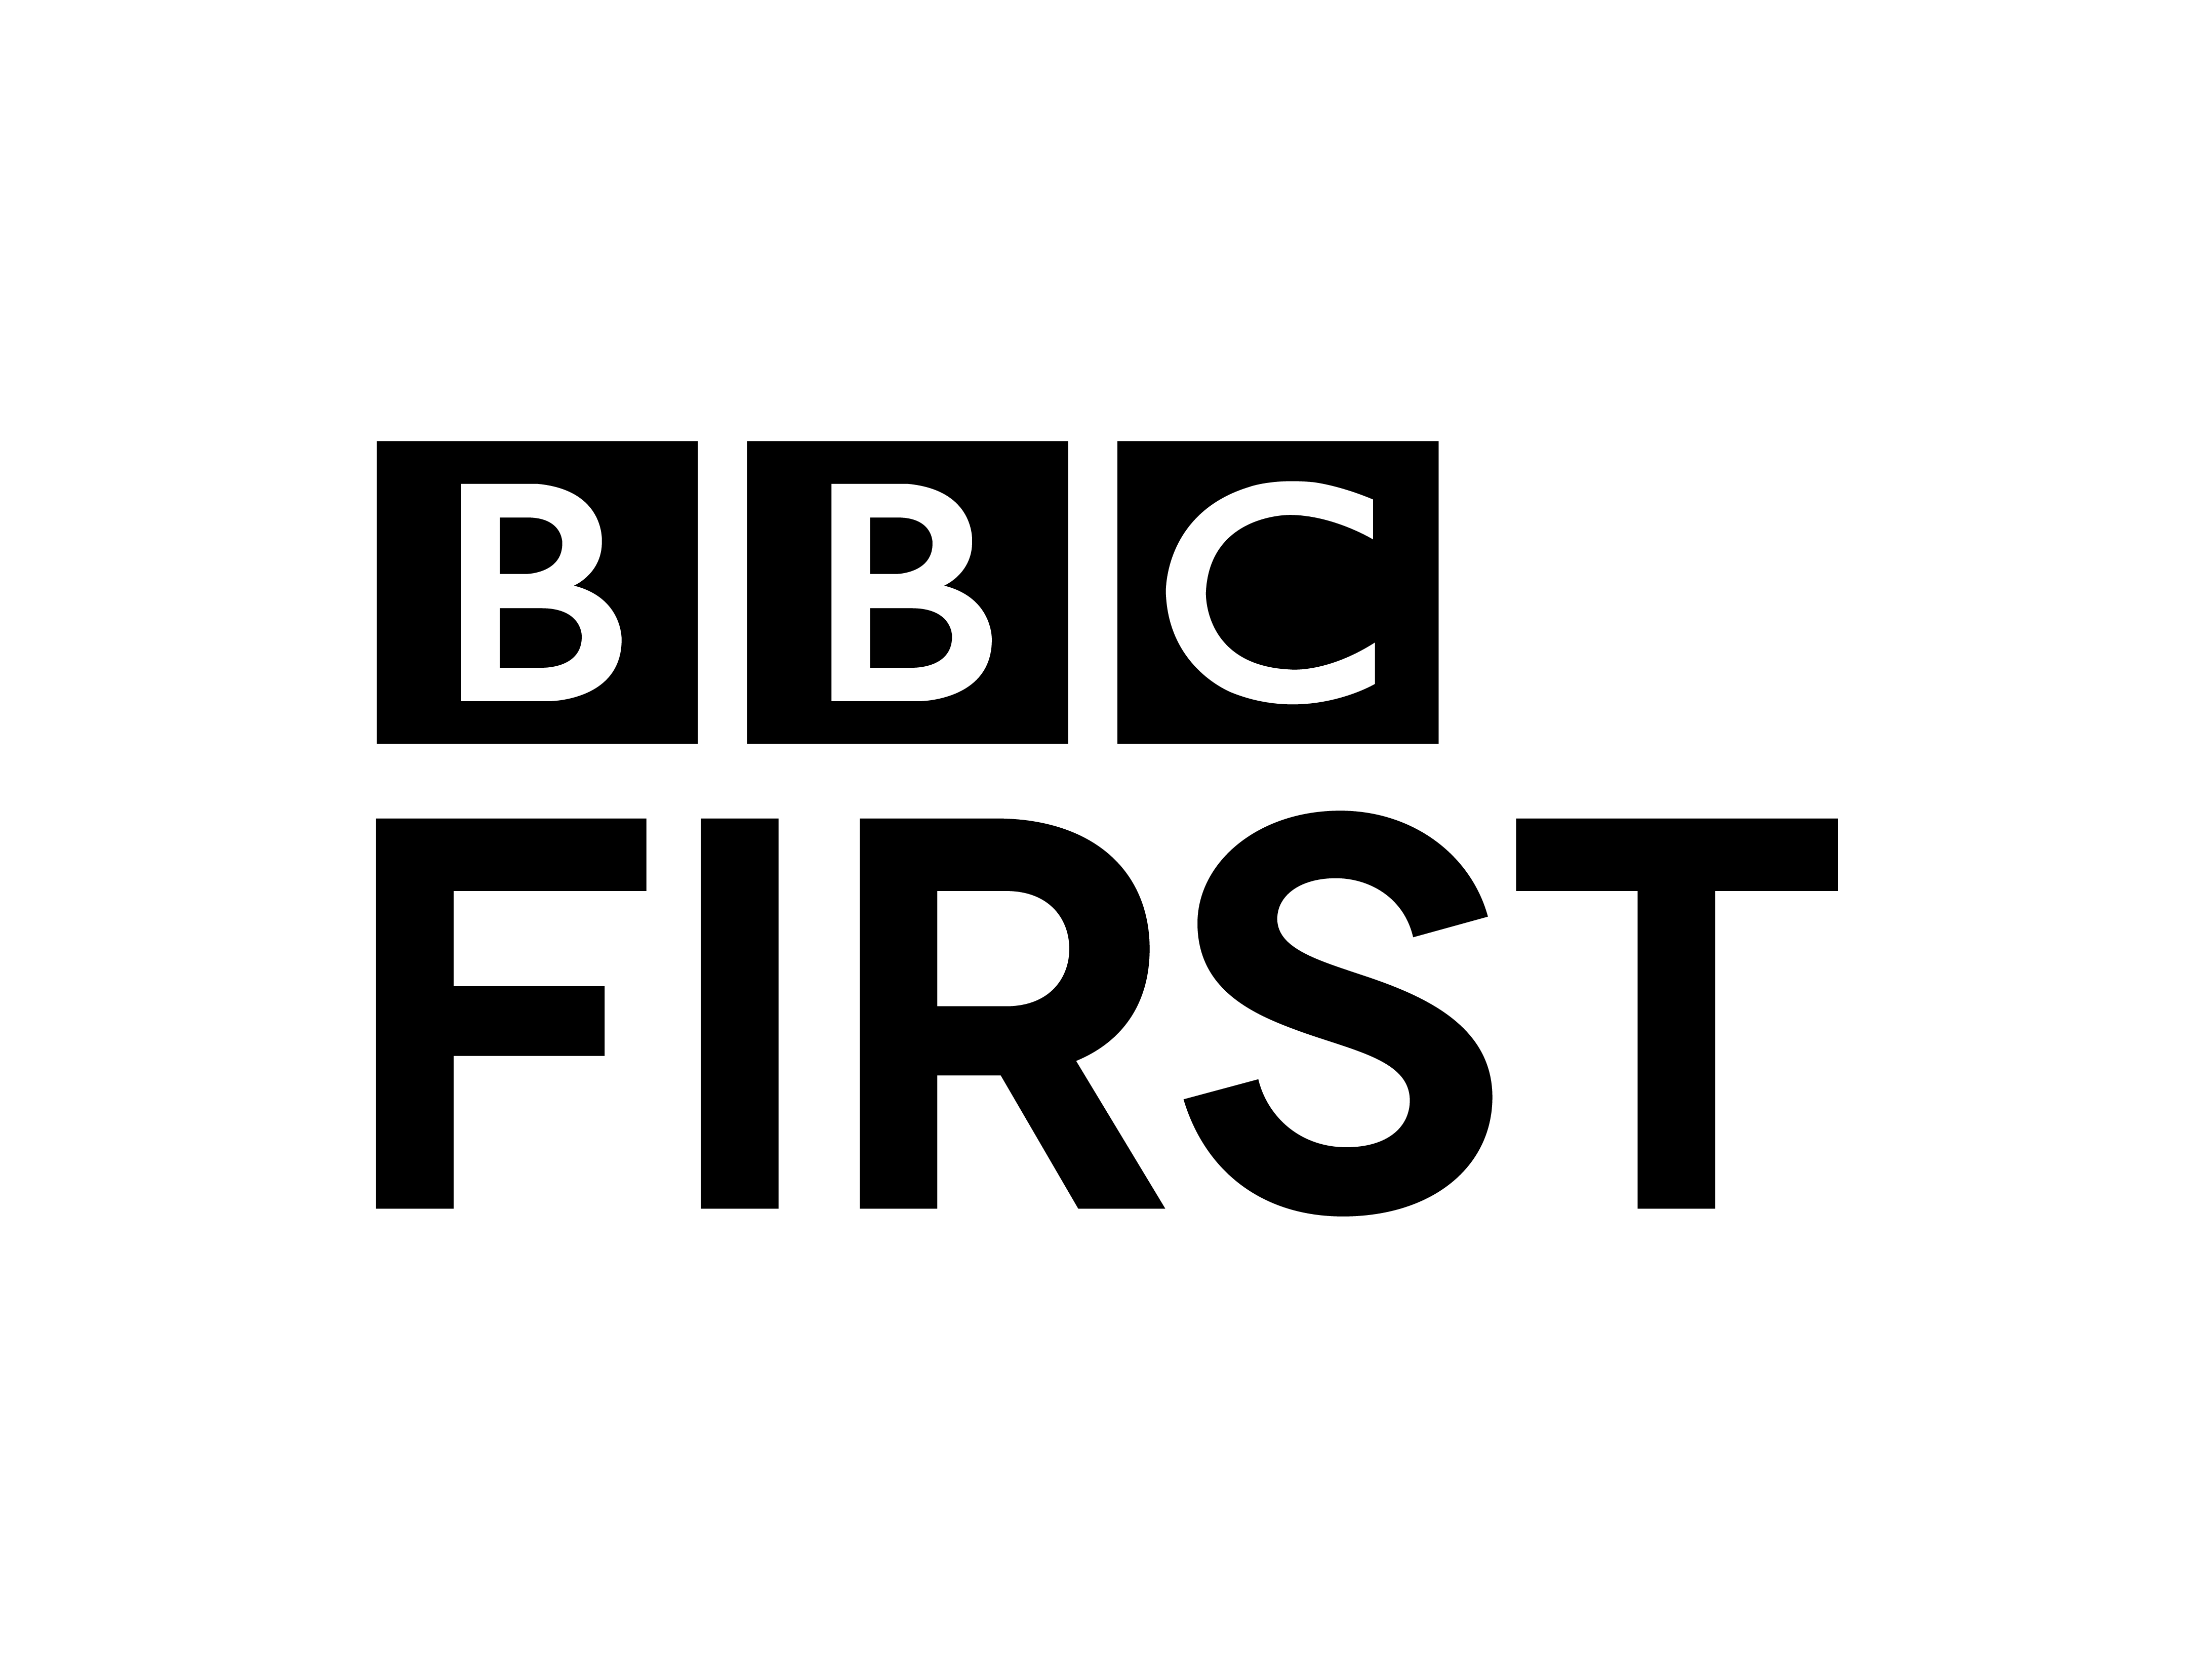 First bbc